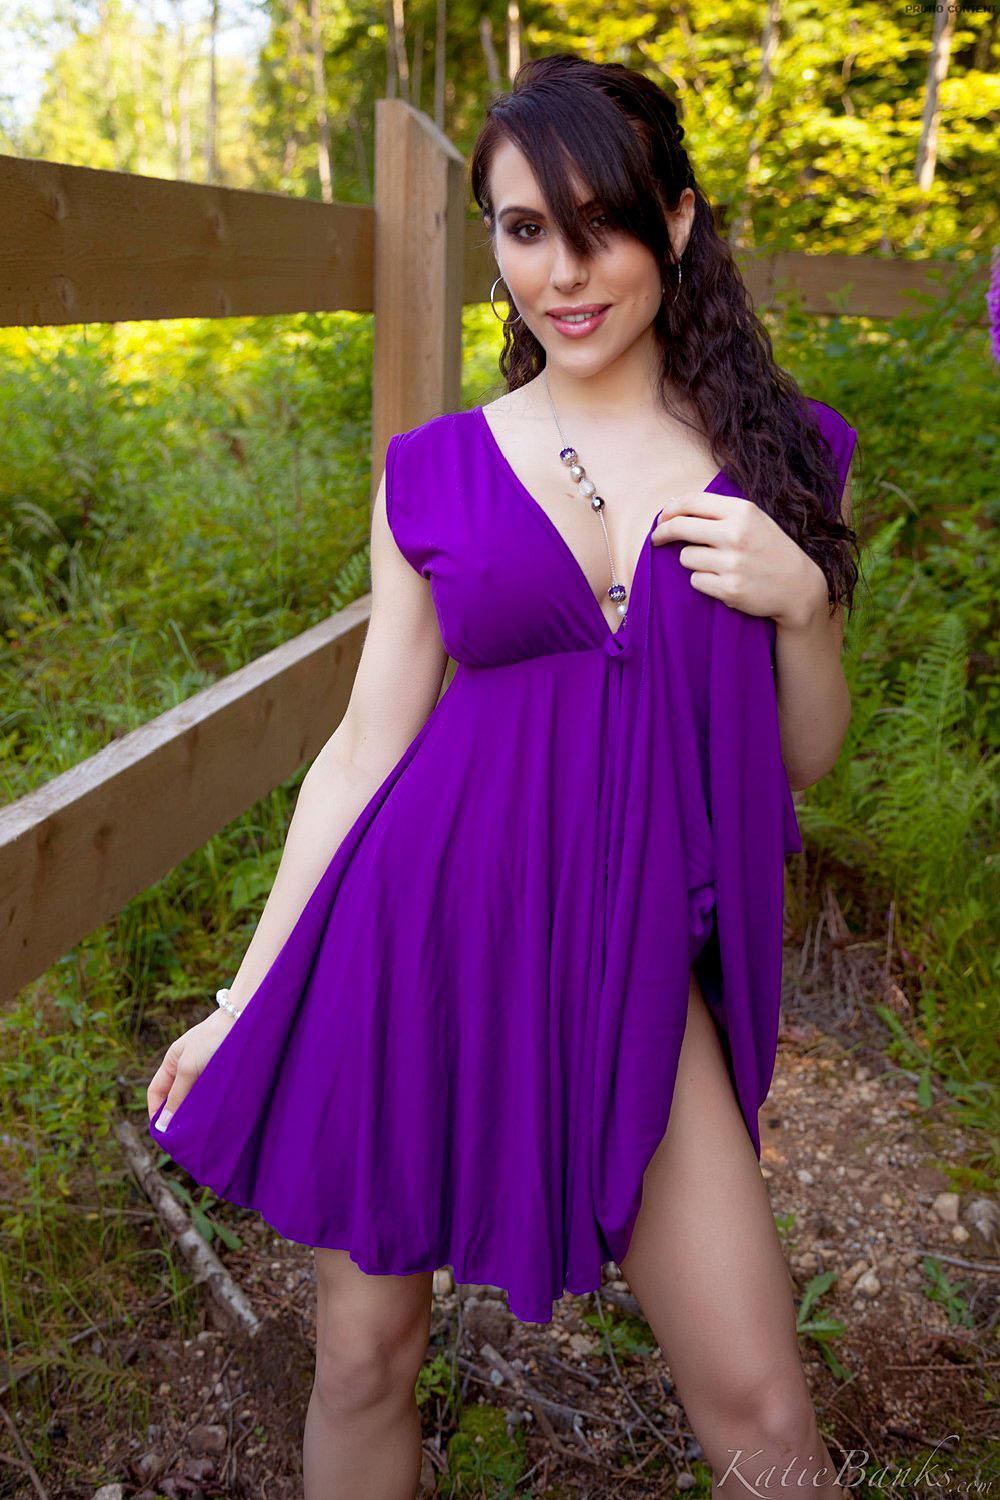 Busty hottie Katie Banks strips out of her Purple dress outside #58097505